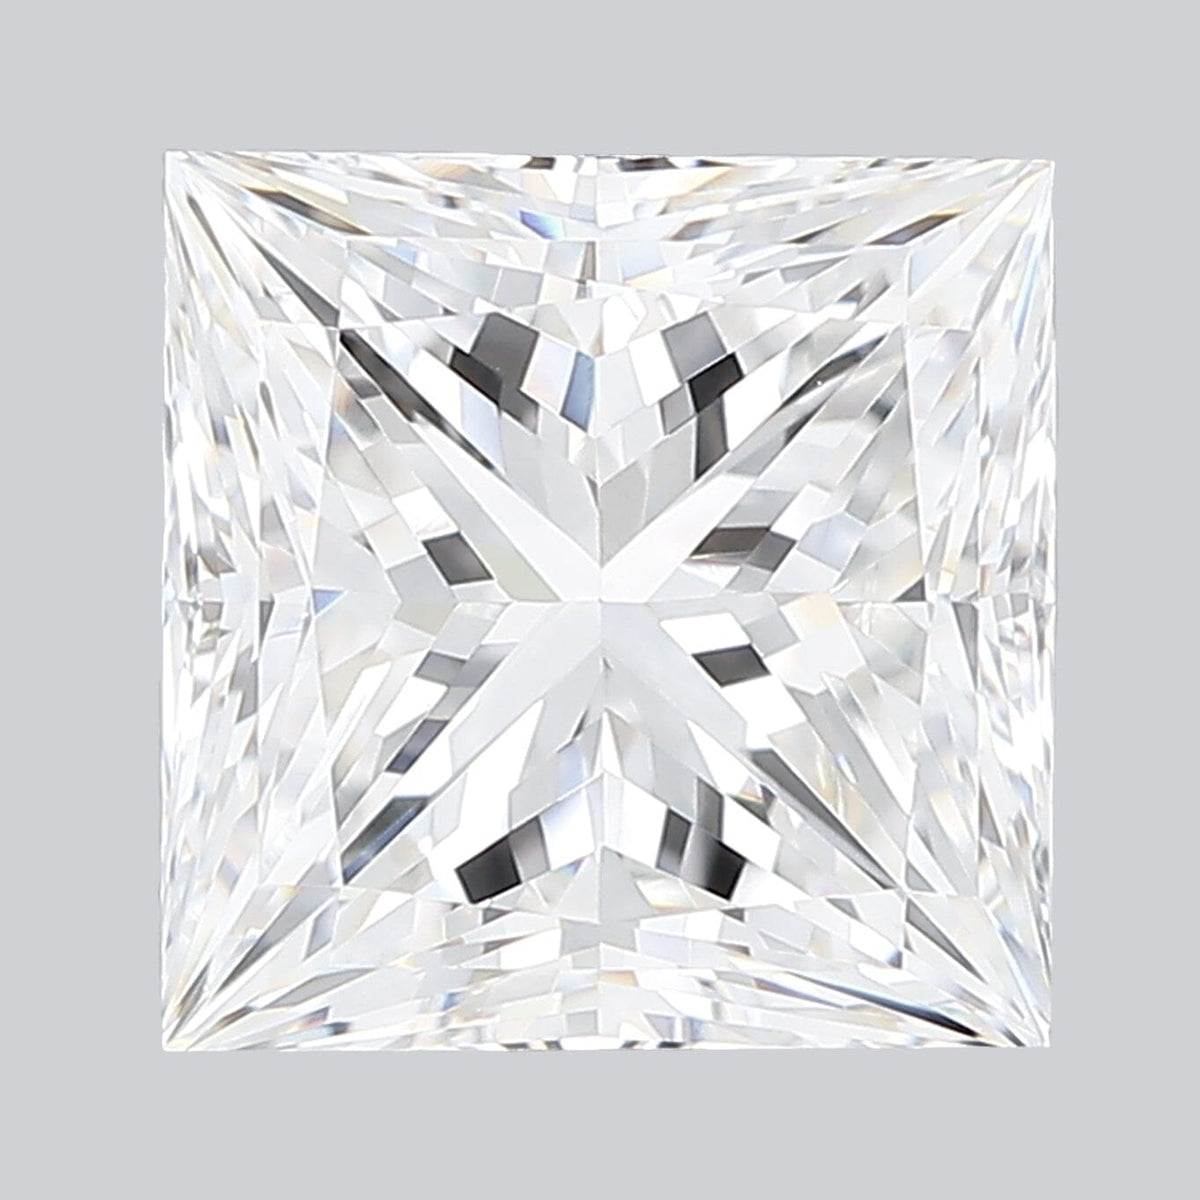 princess cut diamond diagram